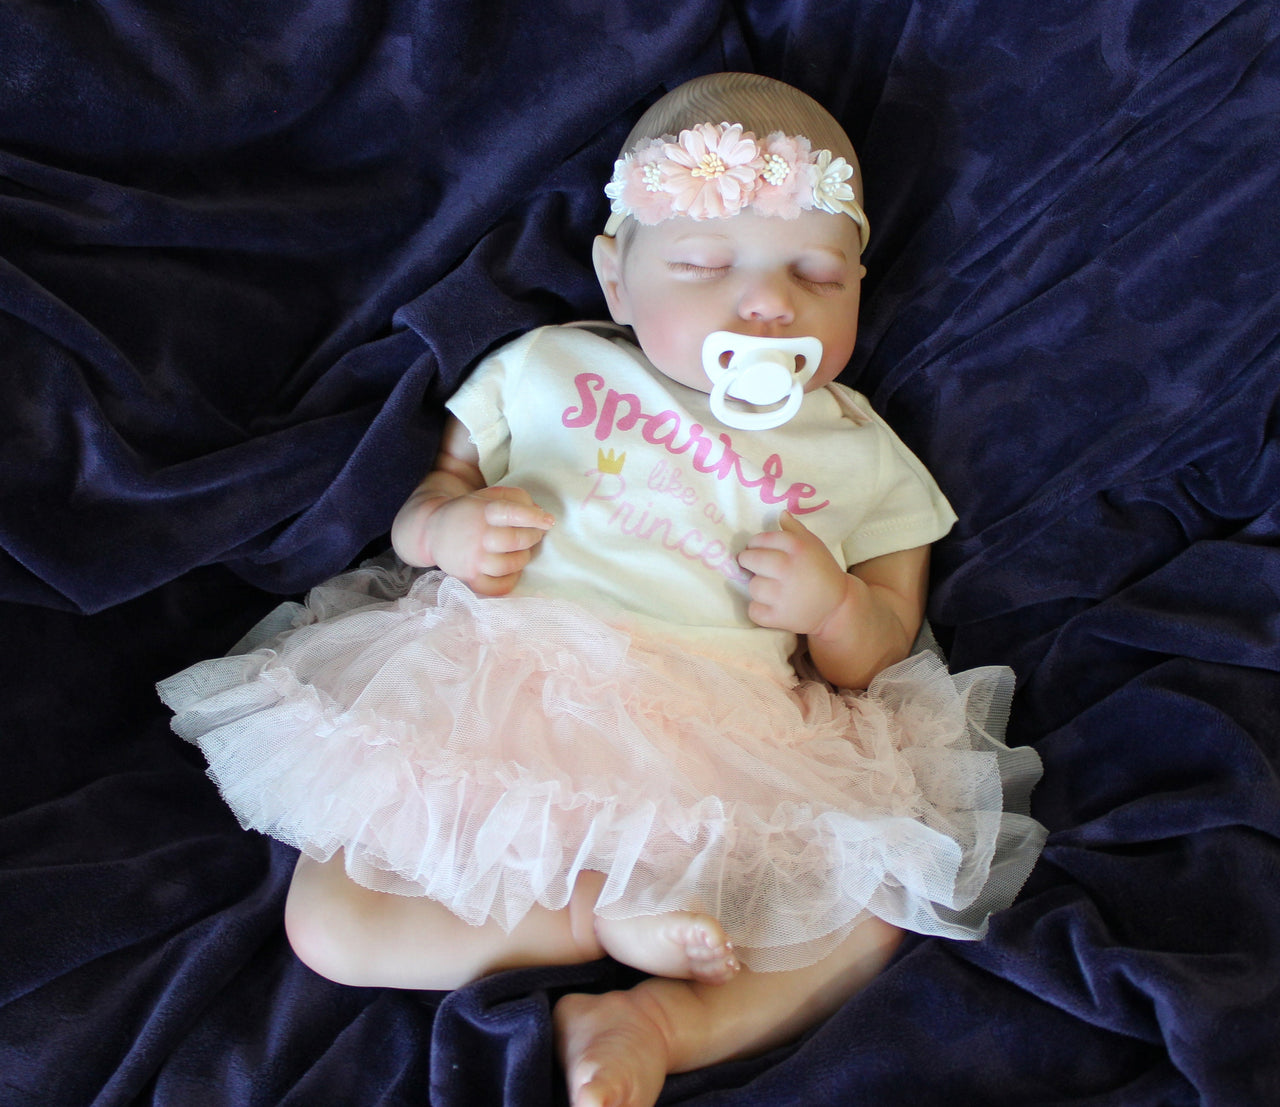 Sparkle Princess Dress, 8 Pounds Weighted Newborn, Lifelike Reborn Baby Doll 20 inch Baby Girl/Boy Soft Heavy Baby Dolls For Children Child Friendly First Play Dolls